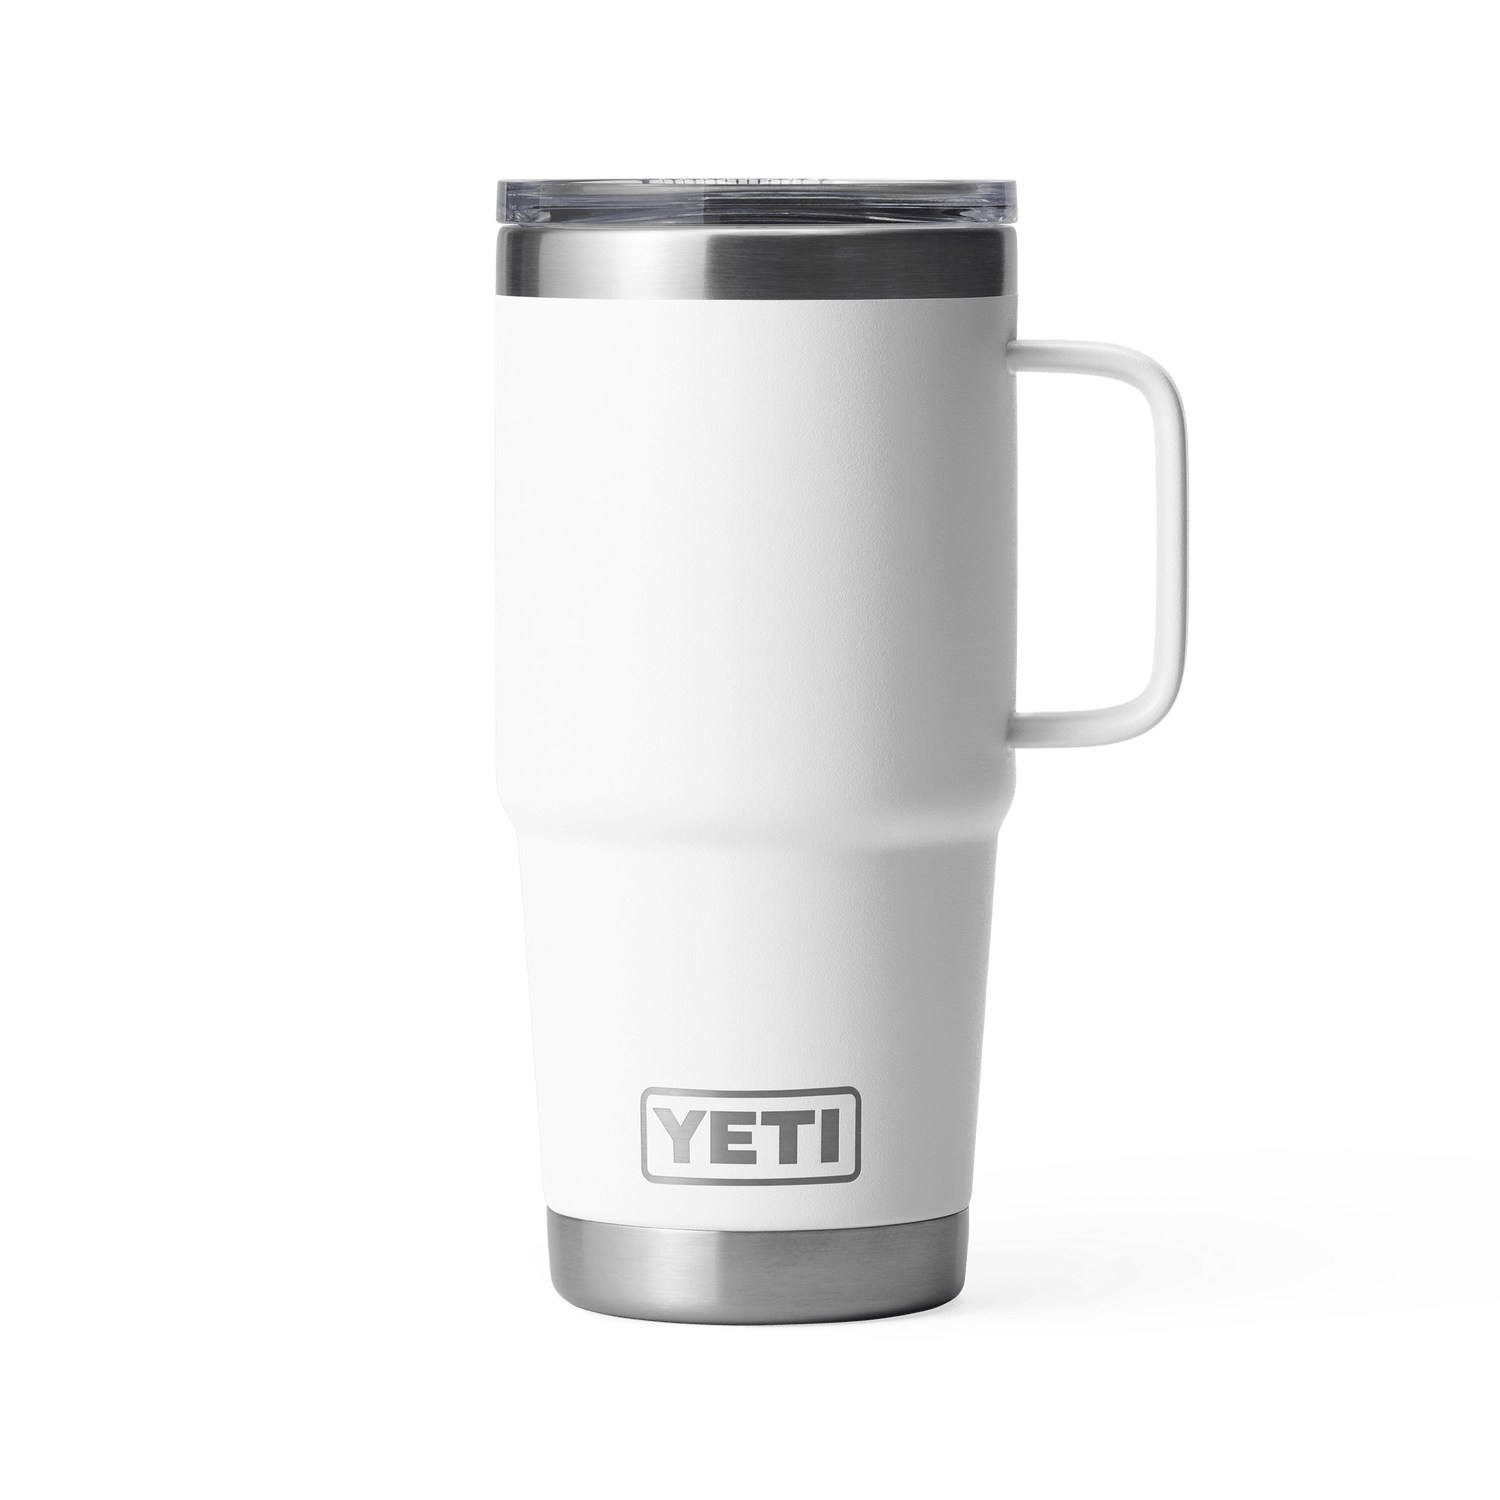 Reusable 20 oz Yeti Tumbler  Traditional Yet Mug With Engraving